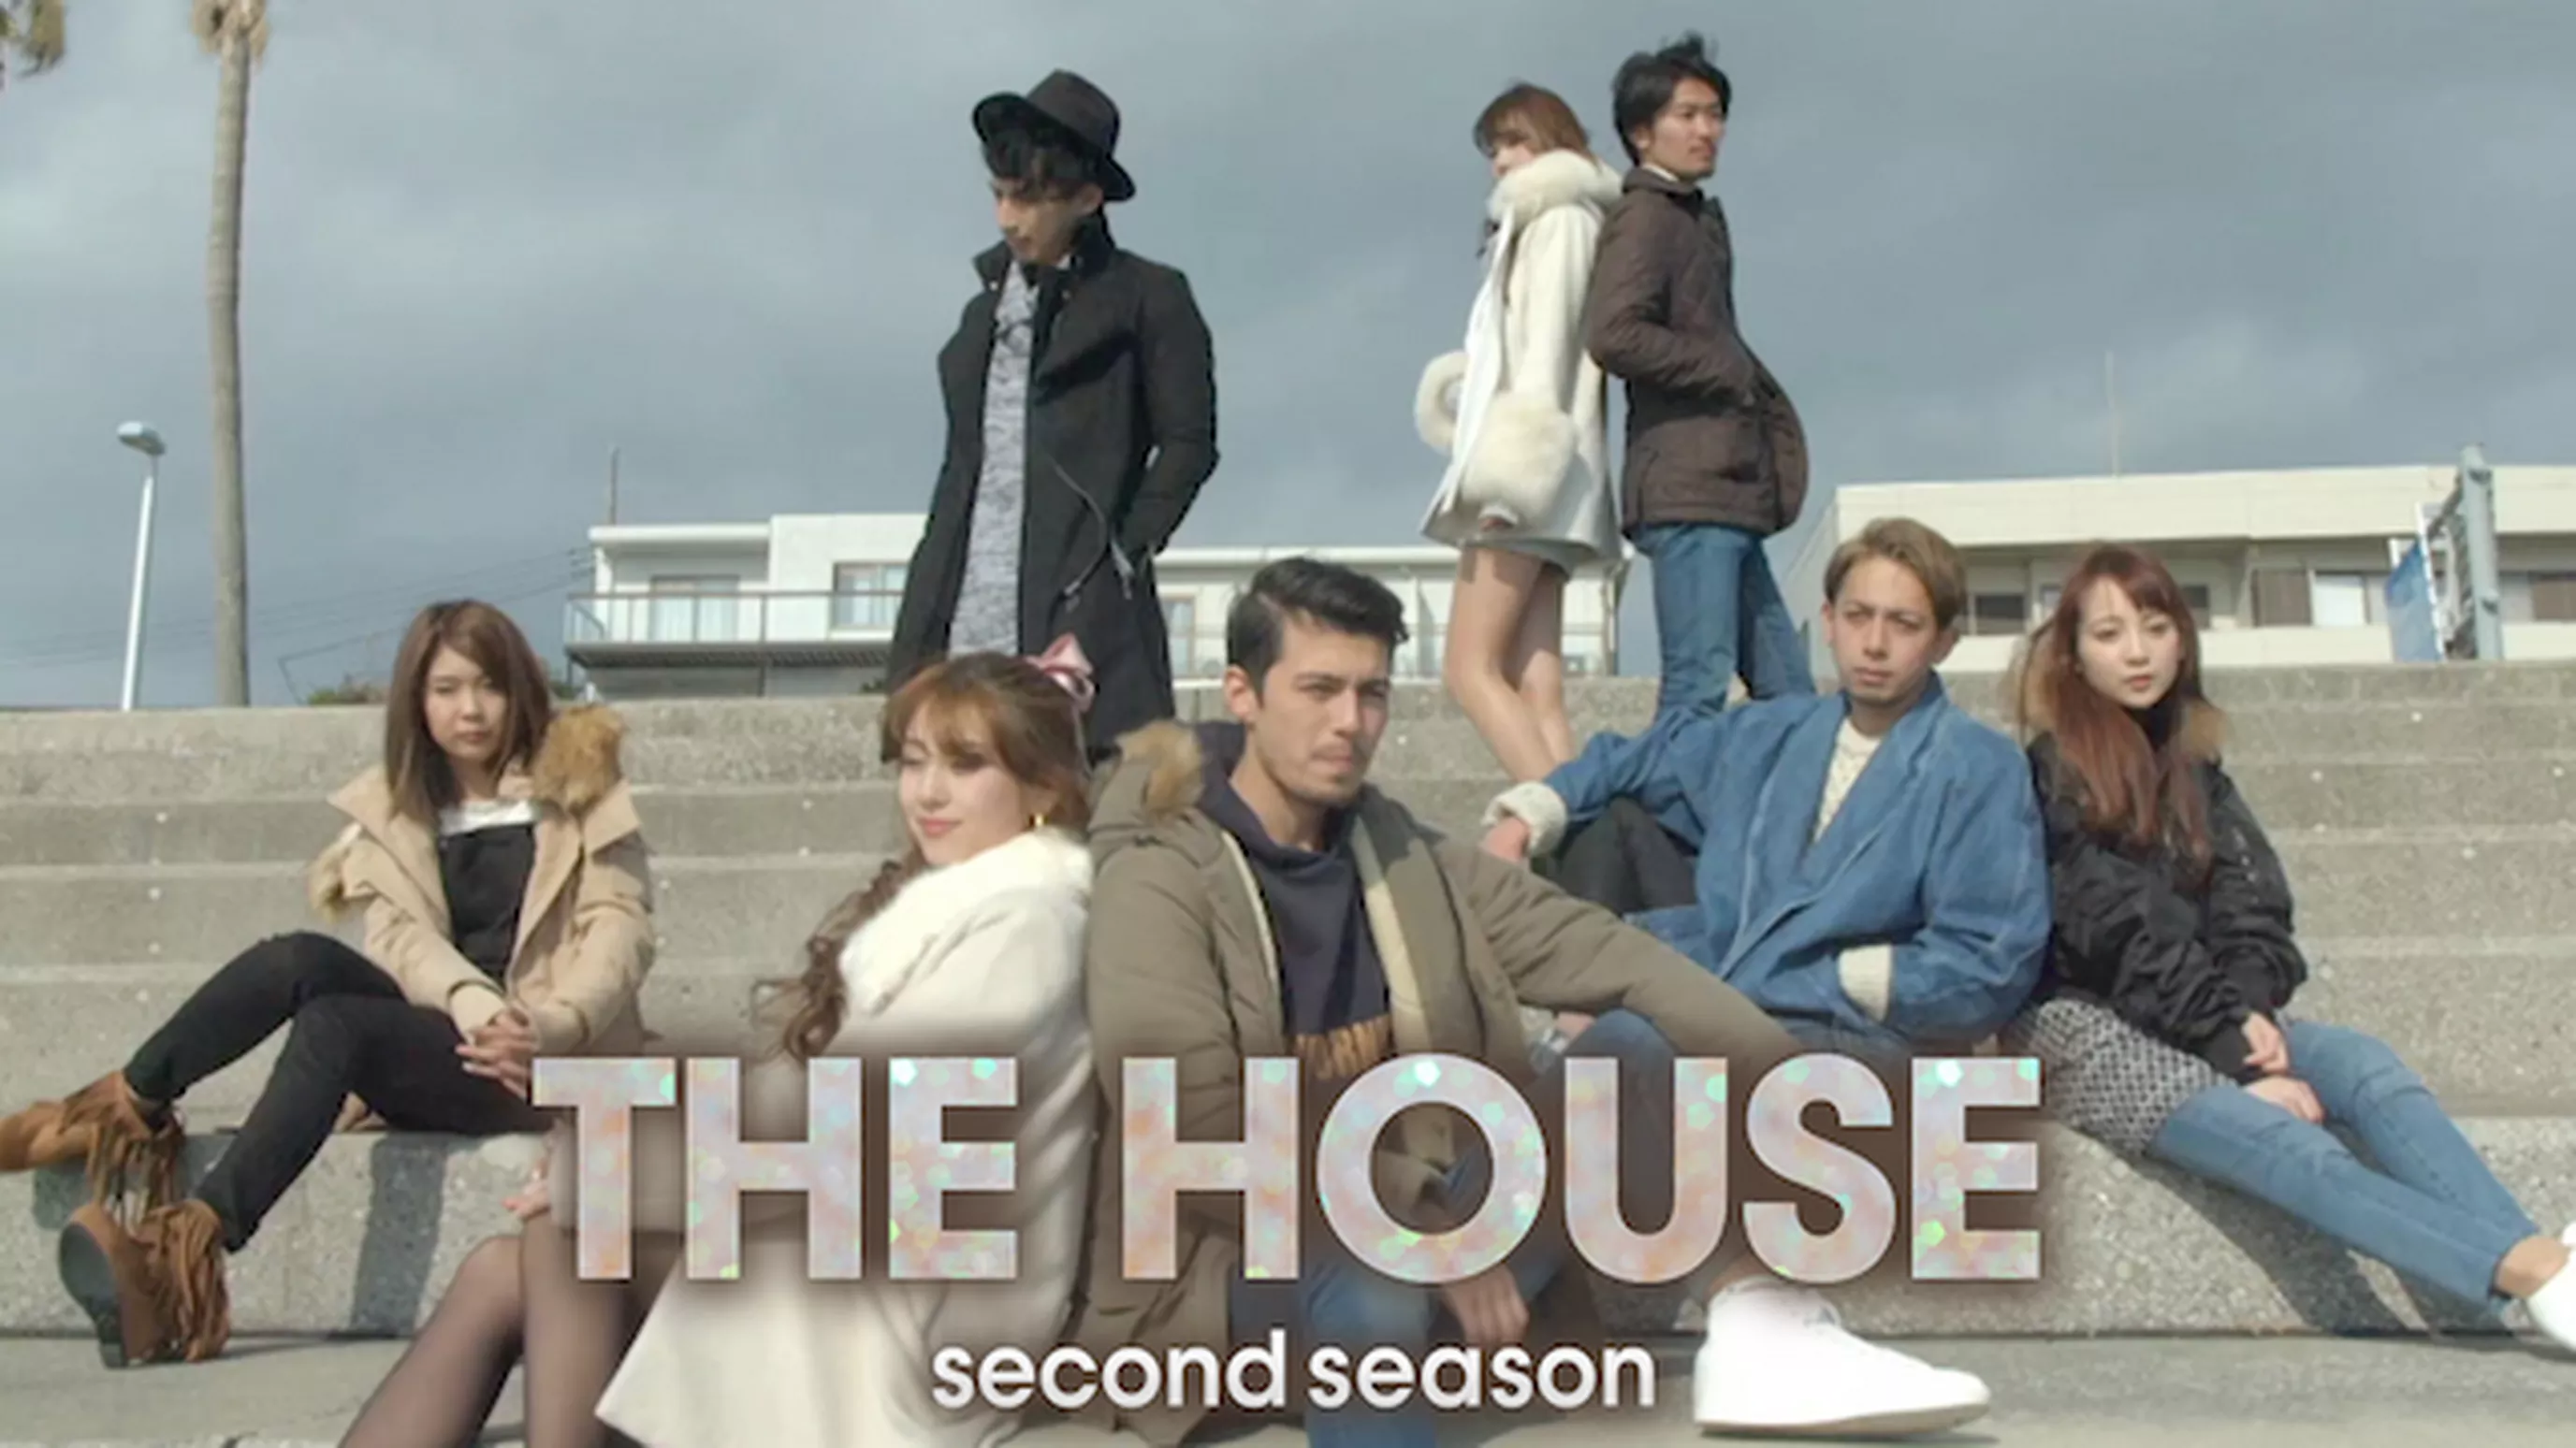 THE HOUSE second season